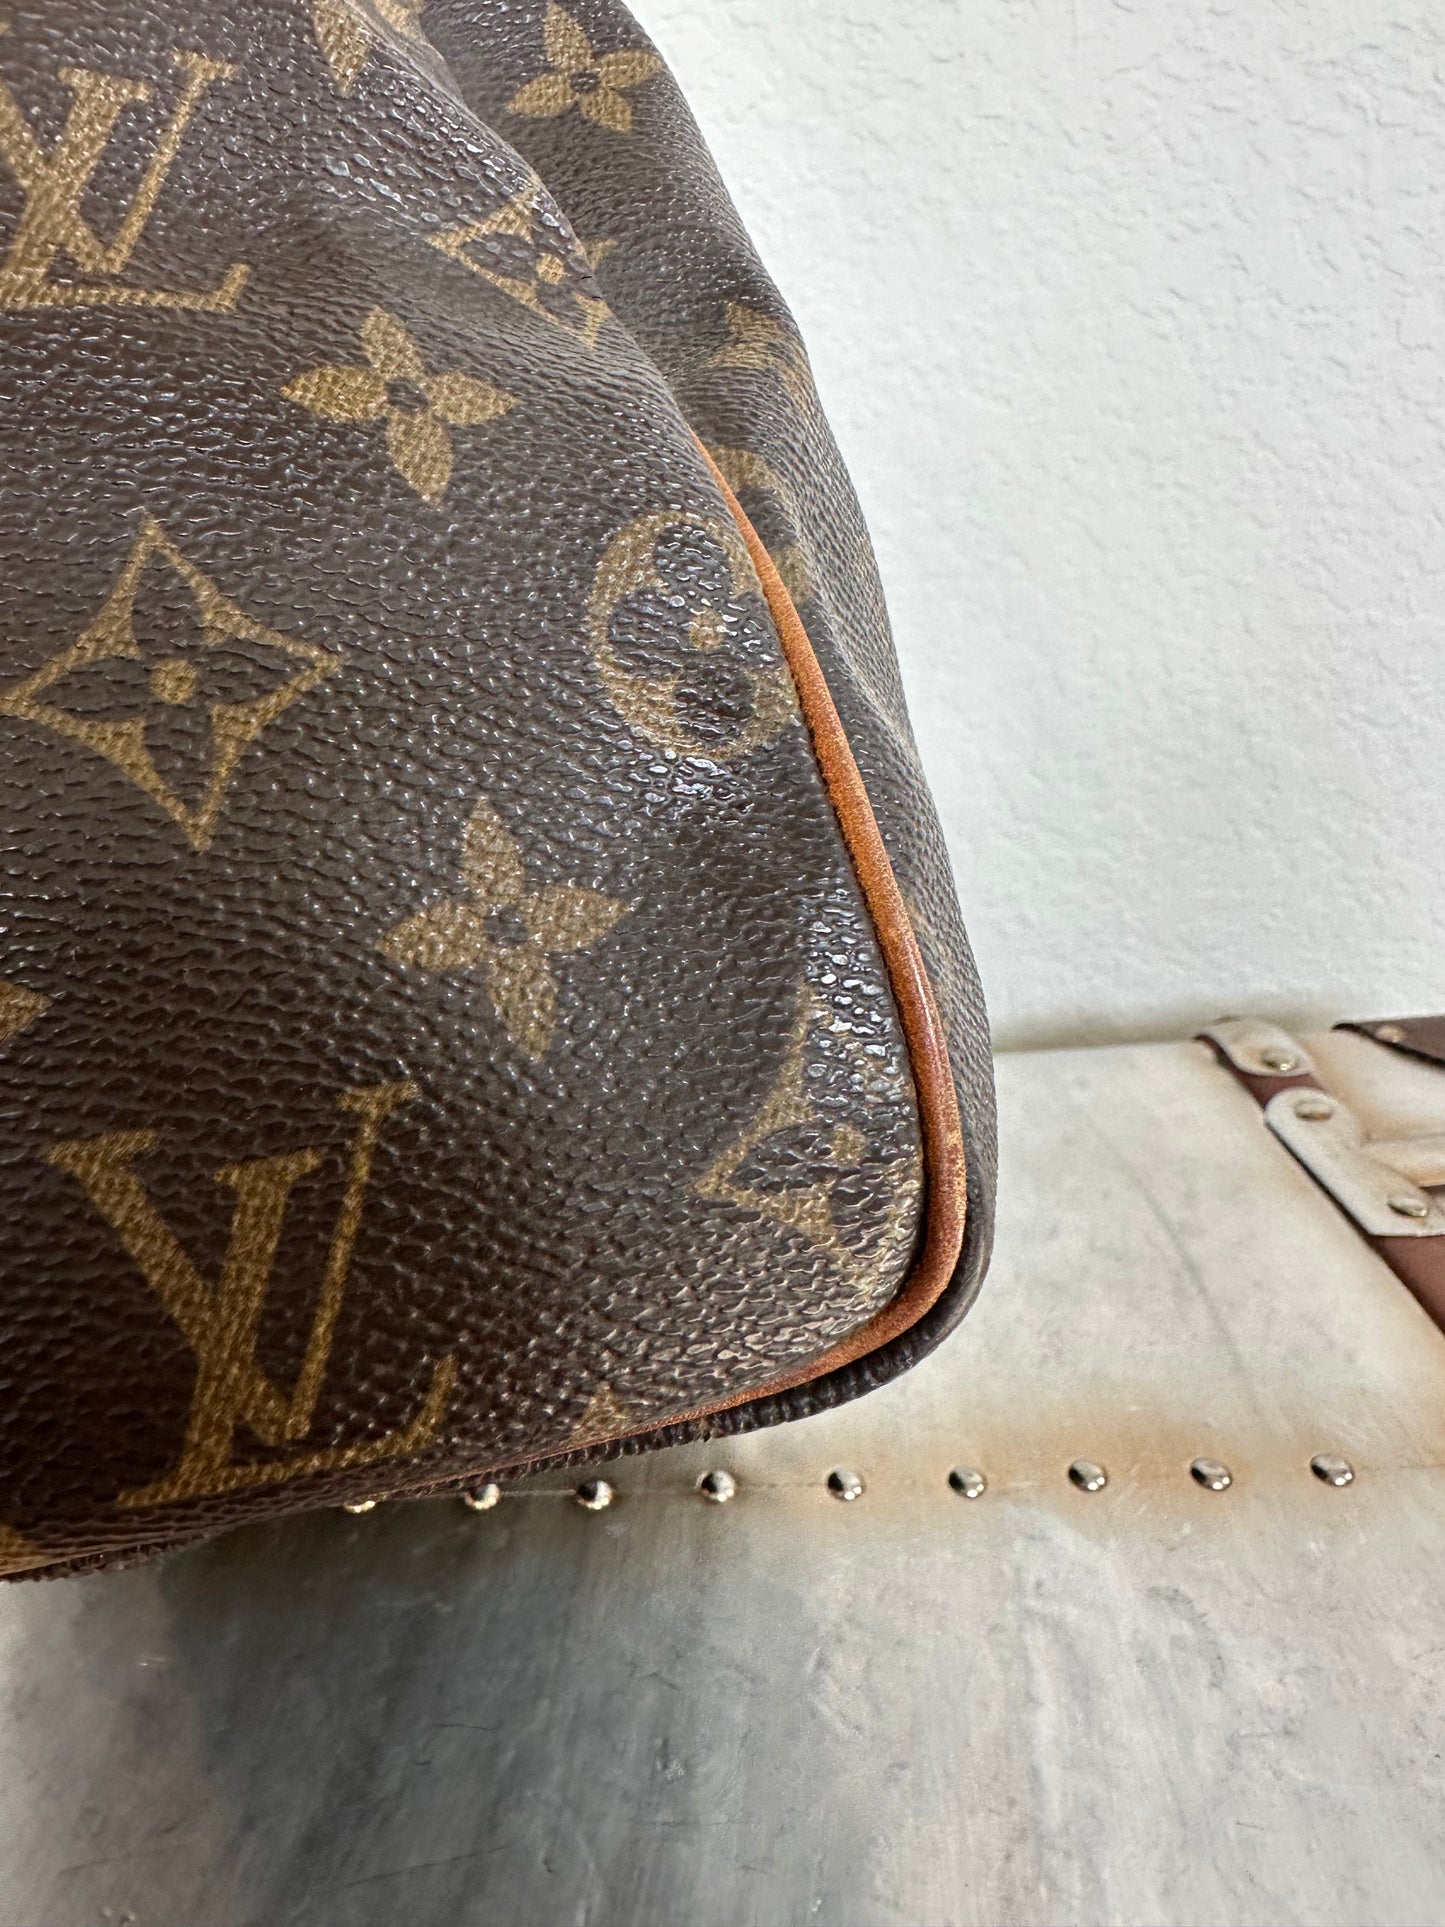 Pre-owned Authentic Louis Vuitton Speedy 30 Monogram Handbag